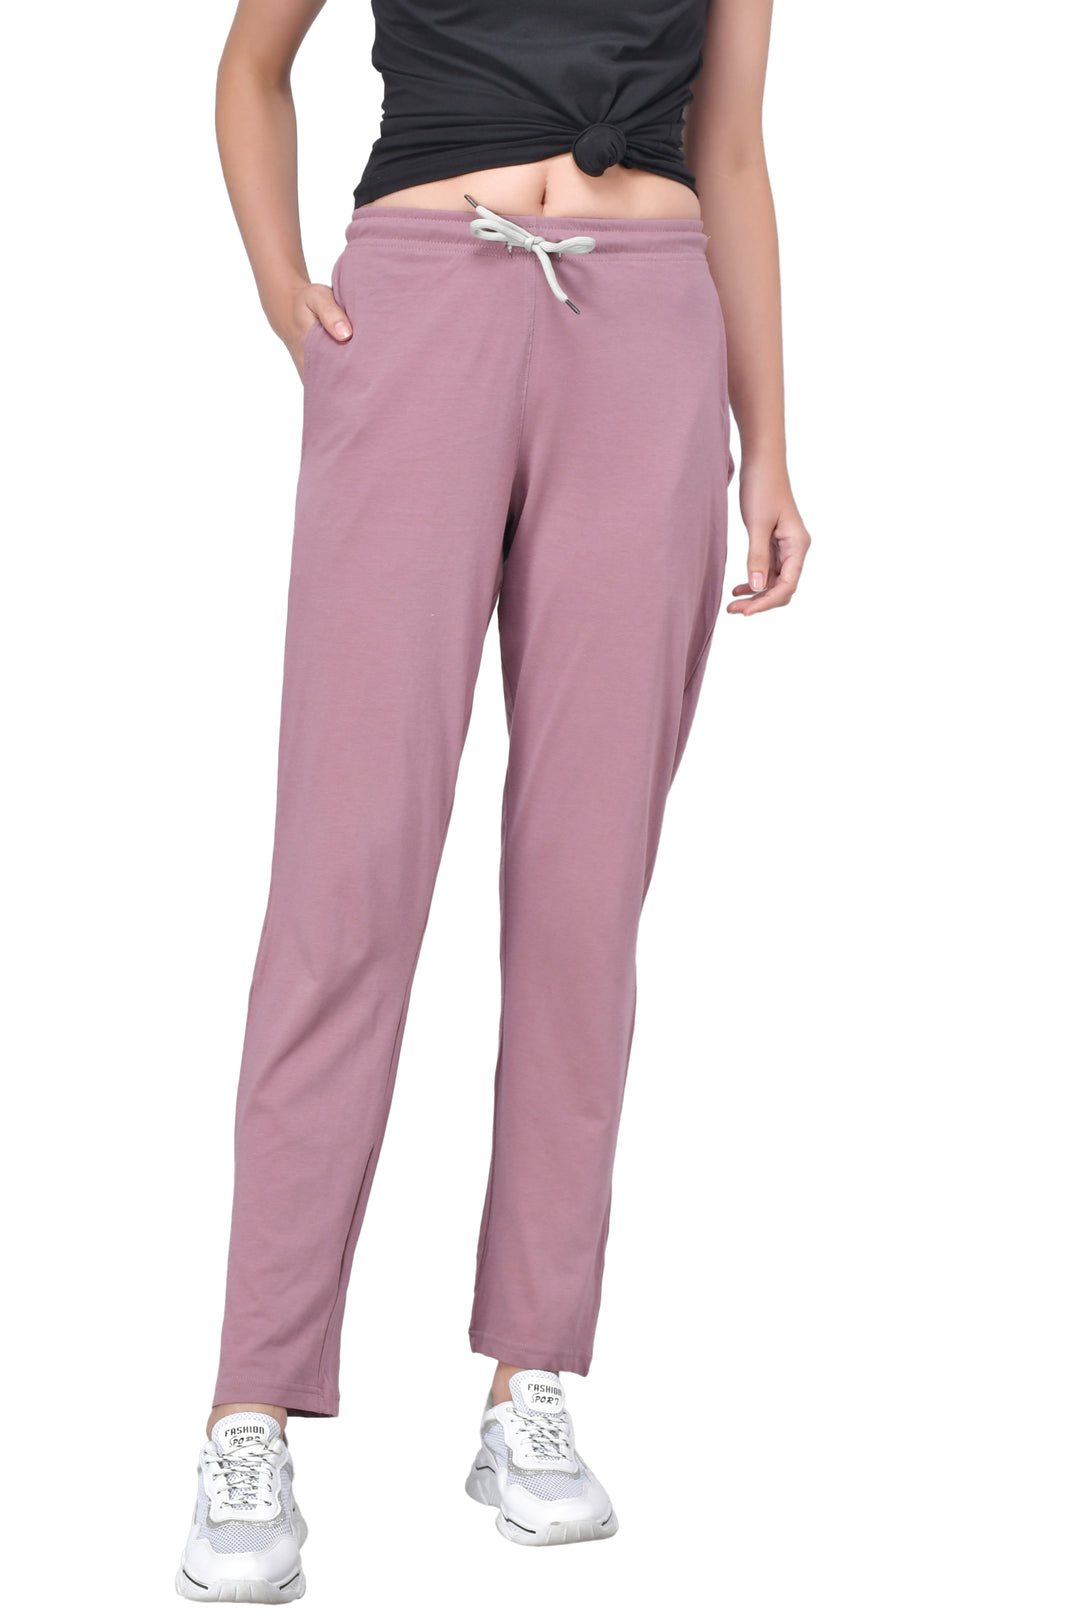 Fflirtygo 2Pcs Women 100% Cotton Solid Joggers/Pajama with pockets